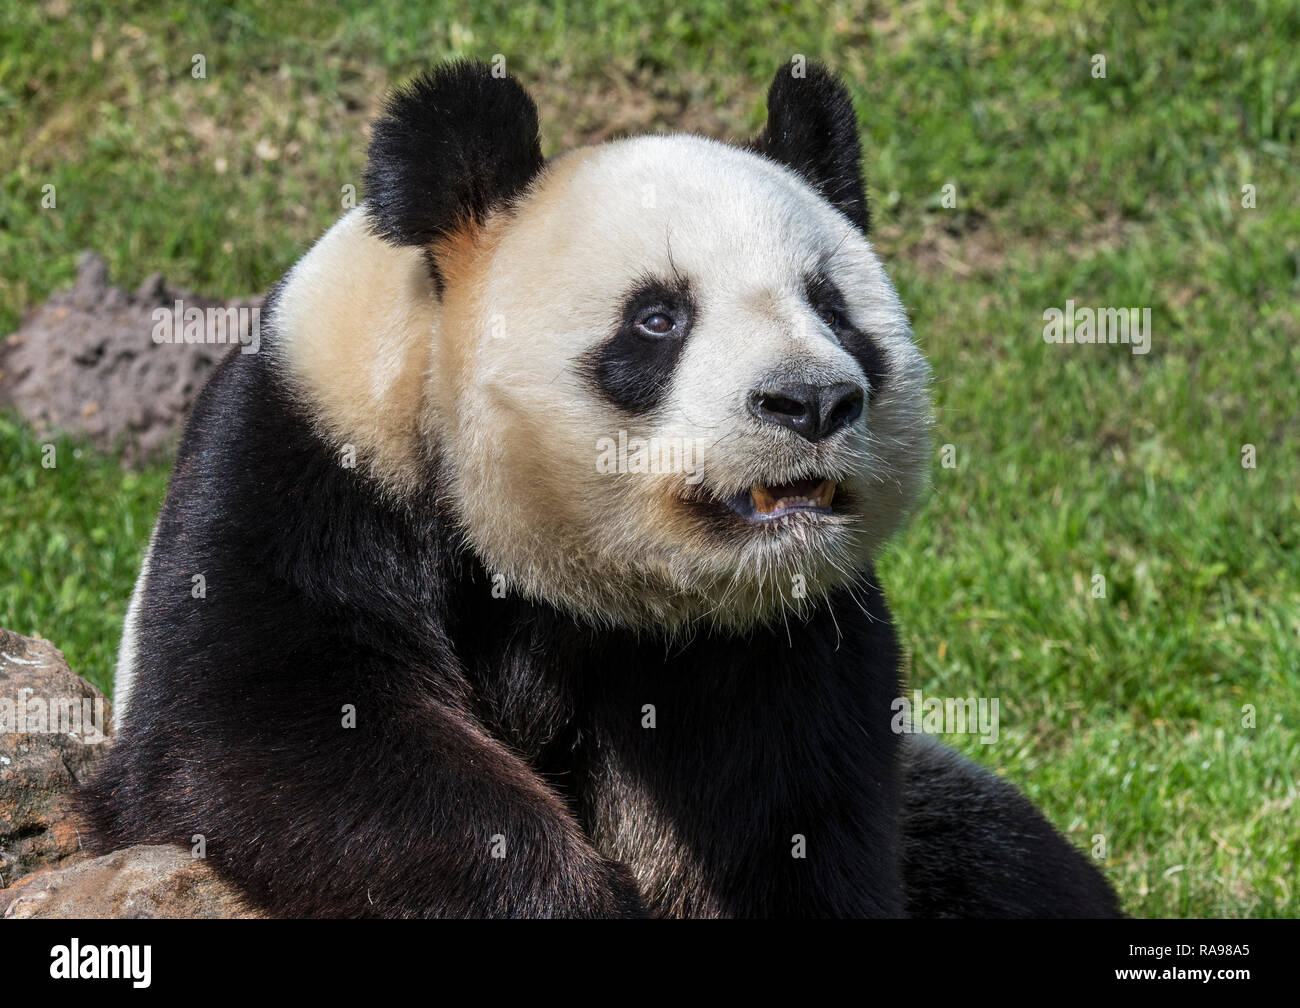 Giant panda (Ailuropoda melanoleuca) close up portrait in zoo / animal park / zoological garden Stock Photo